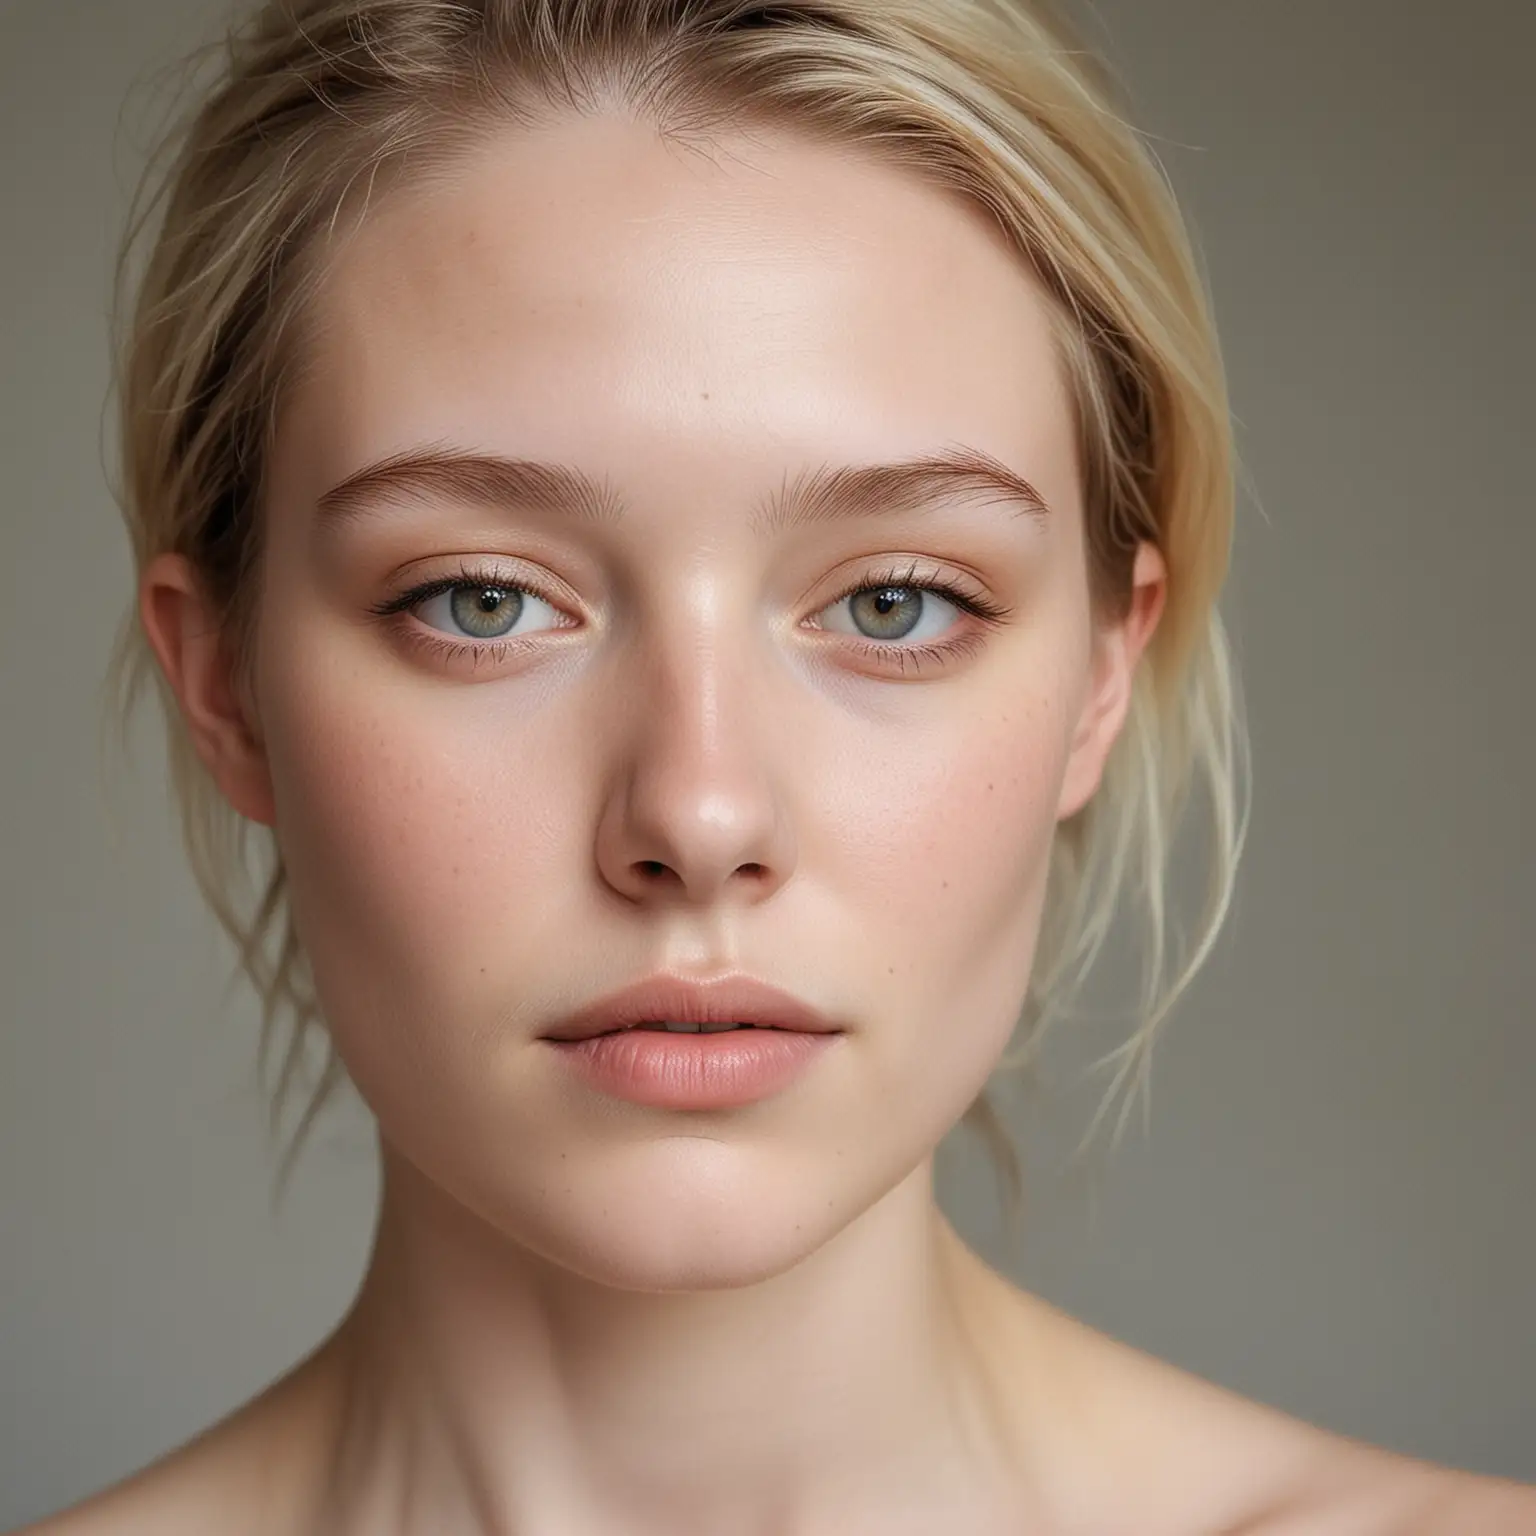 Authentic Natural Beauty Portrait with Minimal Makeup